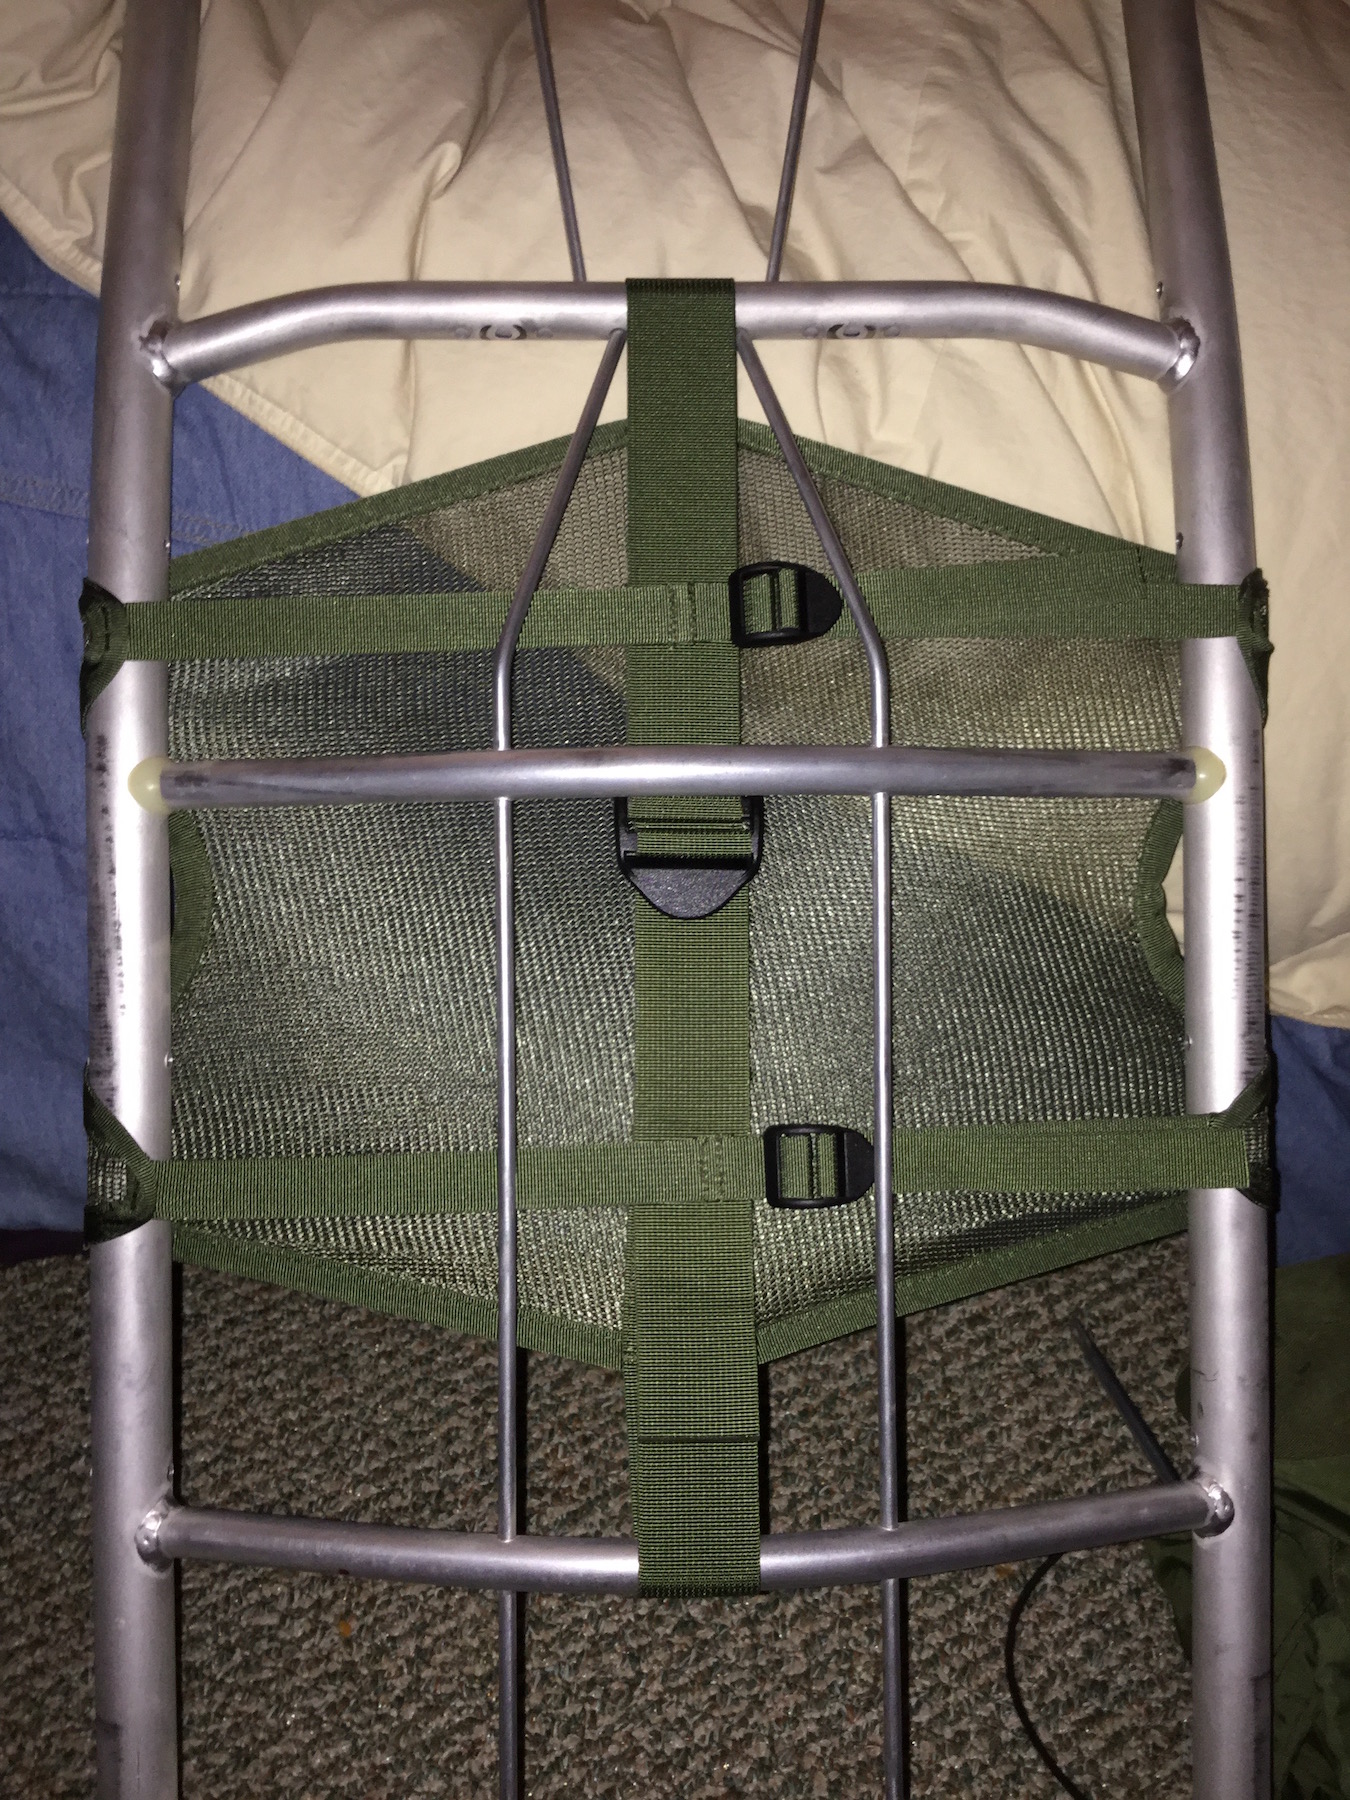 The Kelty external frame backpack thread - Backpacking Light